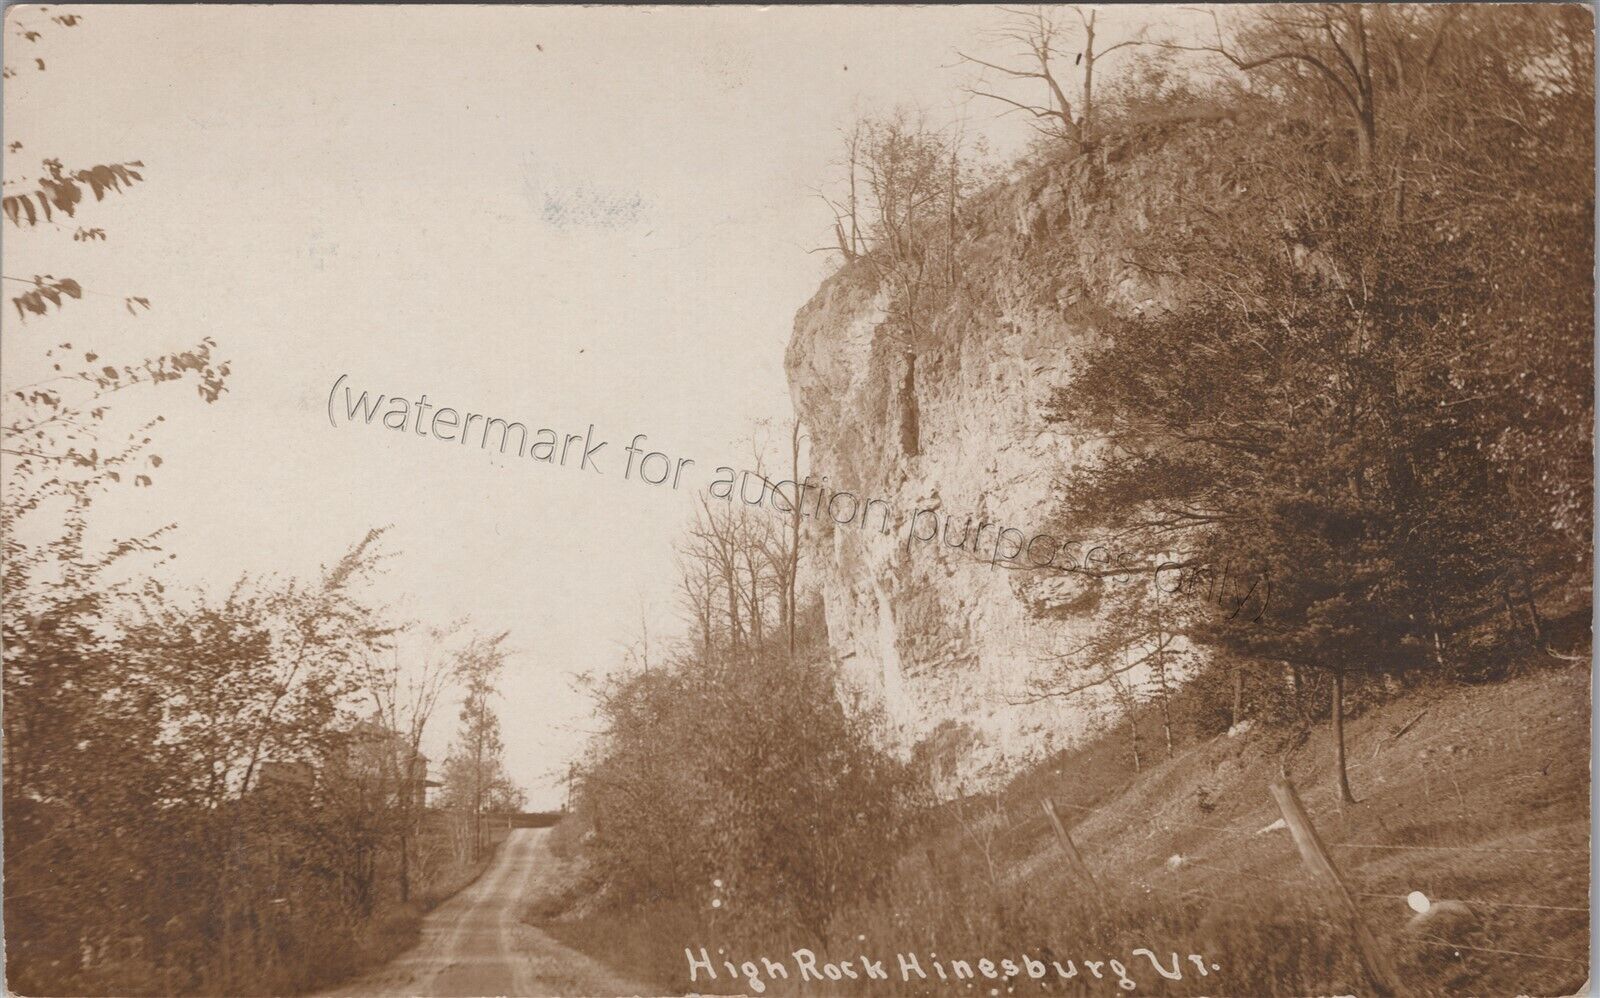 Hinesburg, VT: 1911 High Rock RPPC - Vintage Vermont DPO Real Photo Postcard